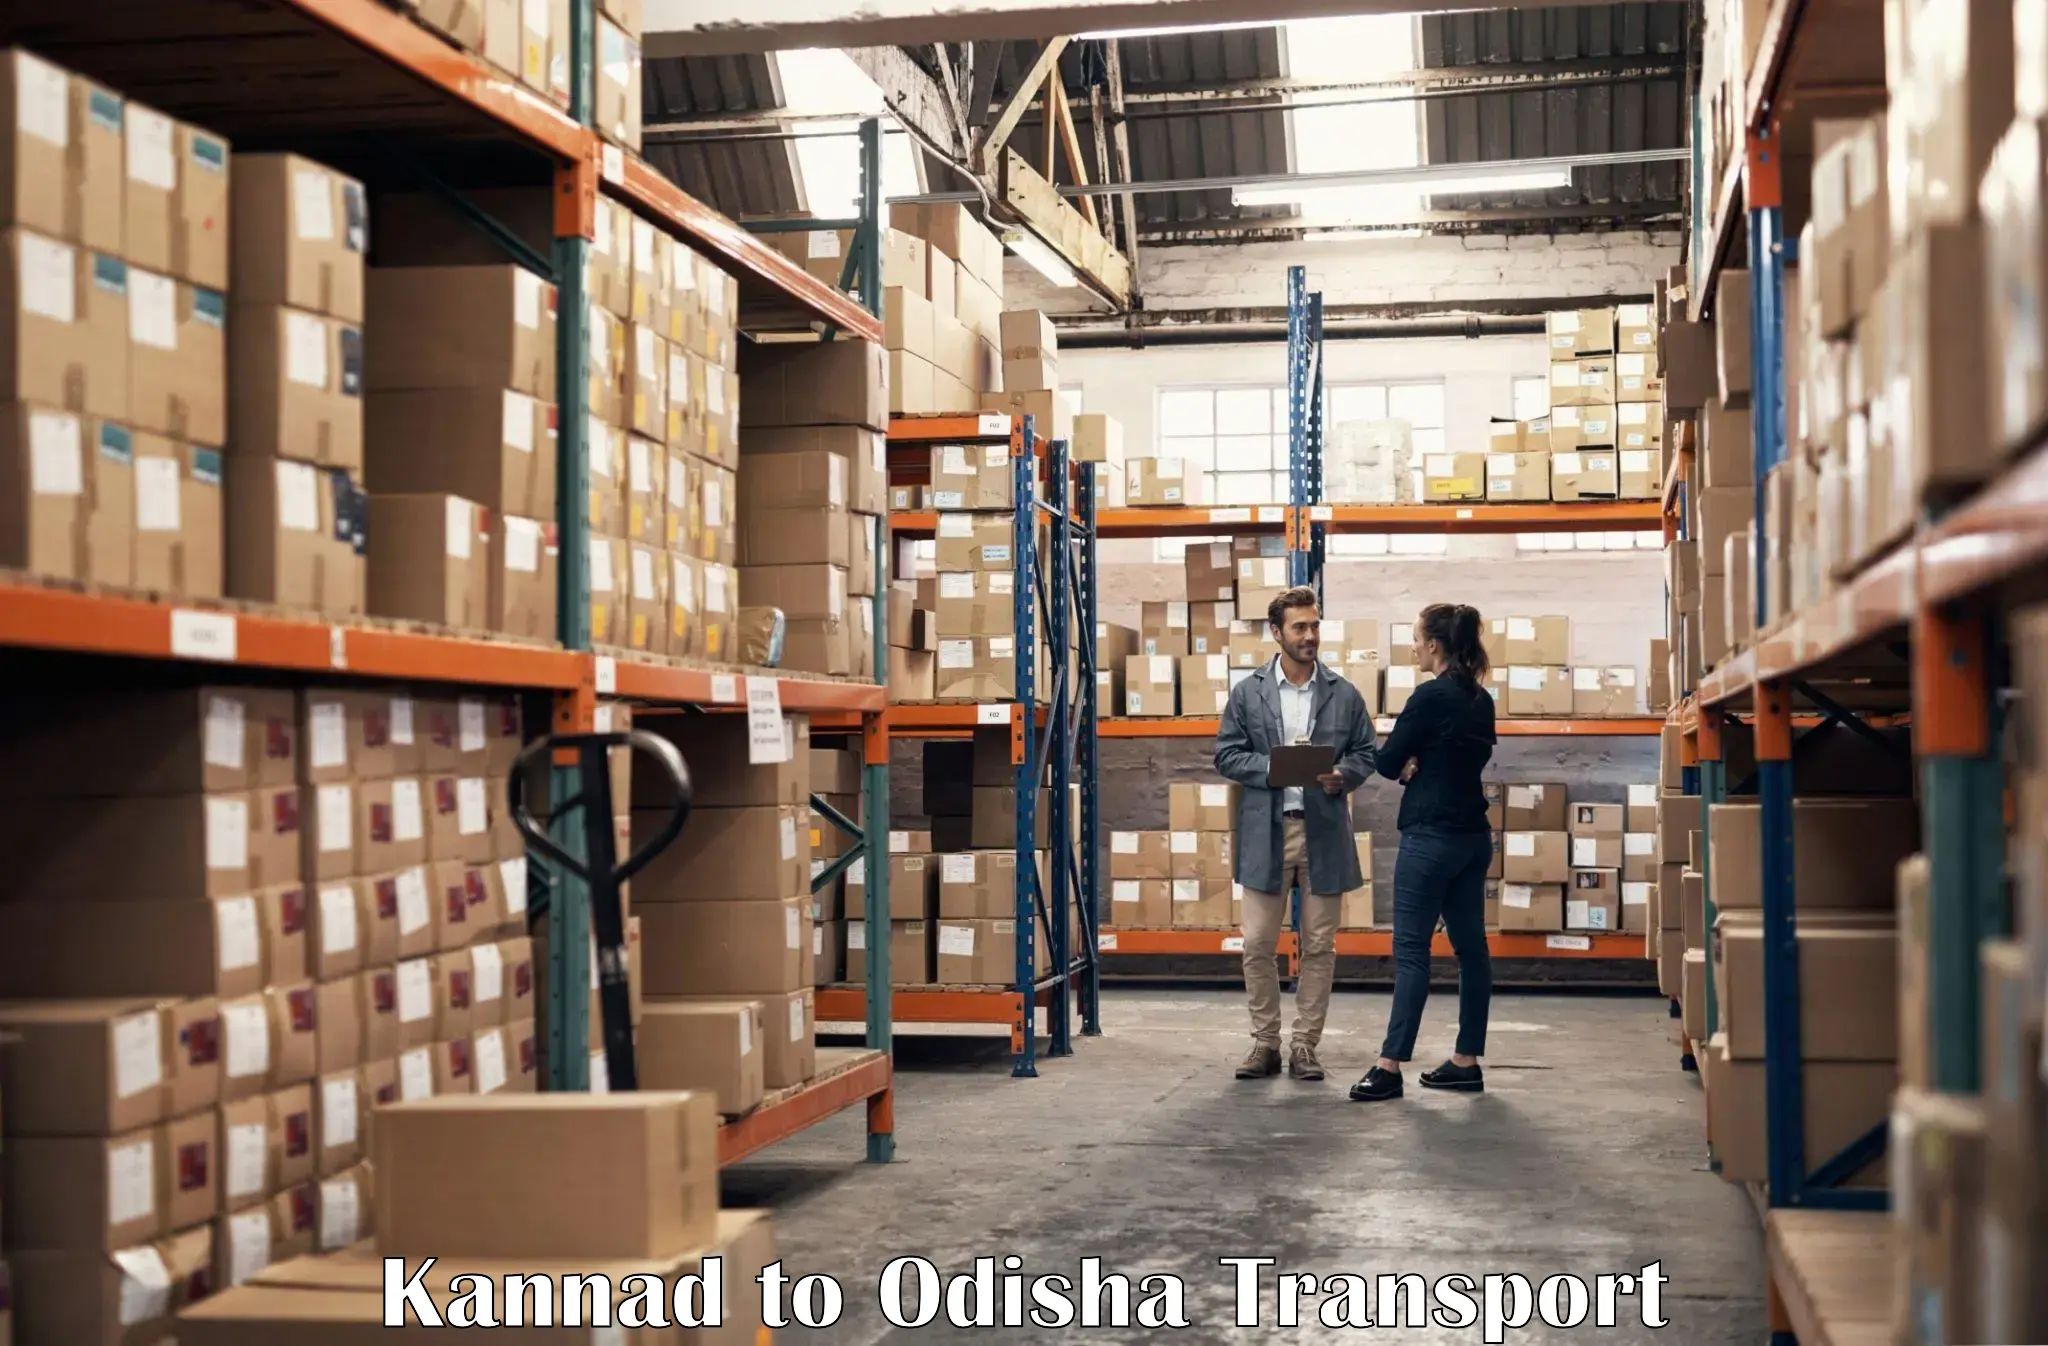 Truck transport companies in India Kannad to Sambalpur